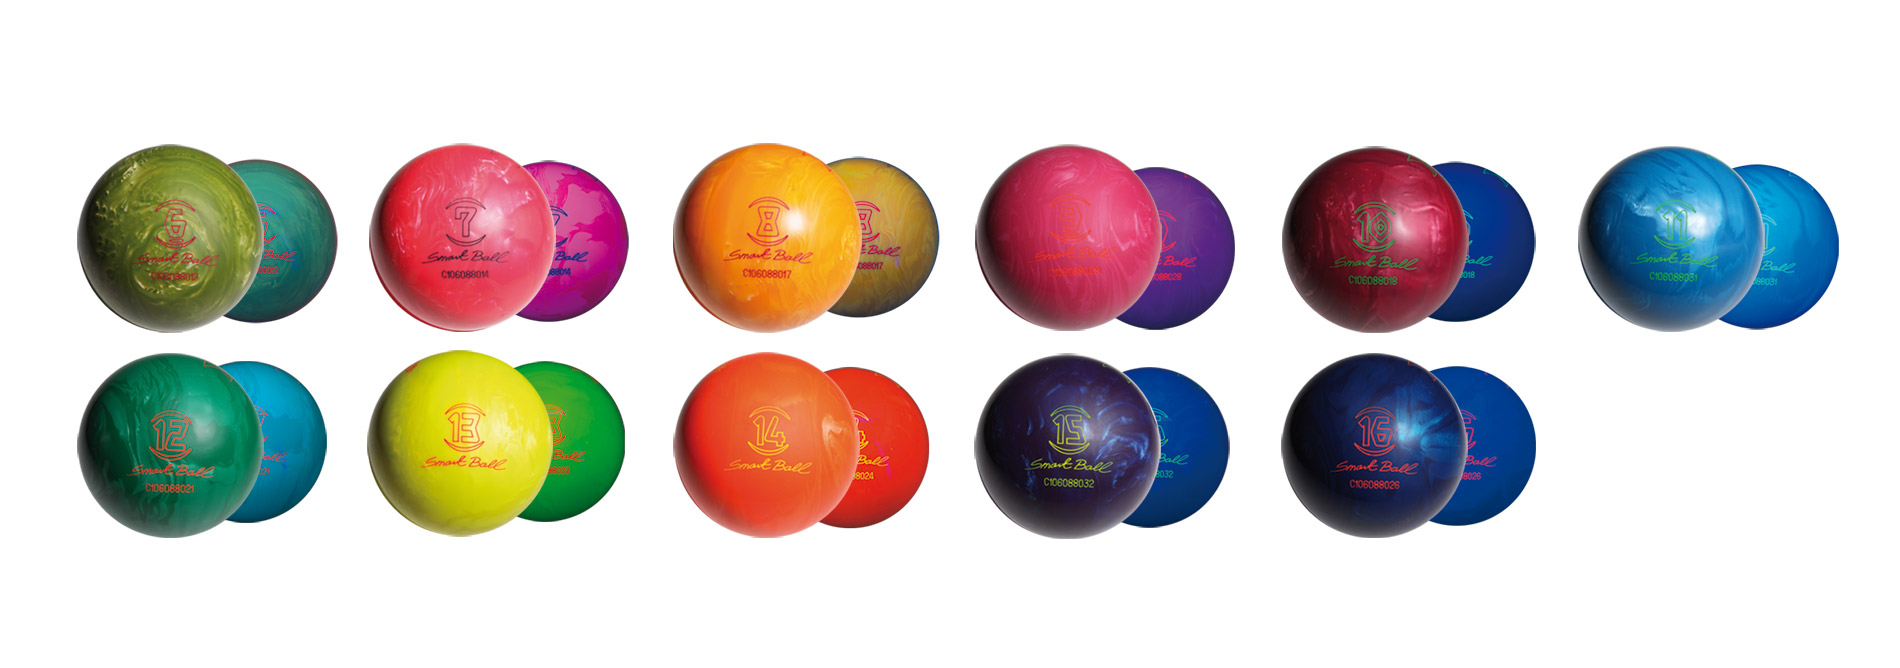 qubicaamf-bowlingl-smart-ball-feature.jpg